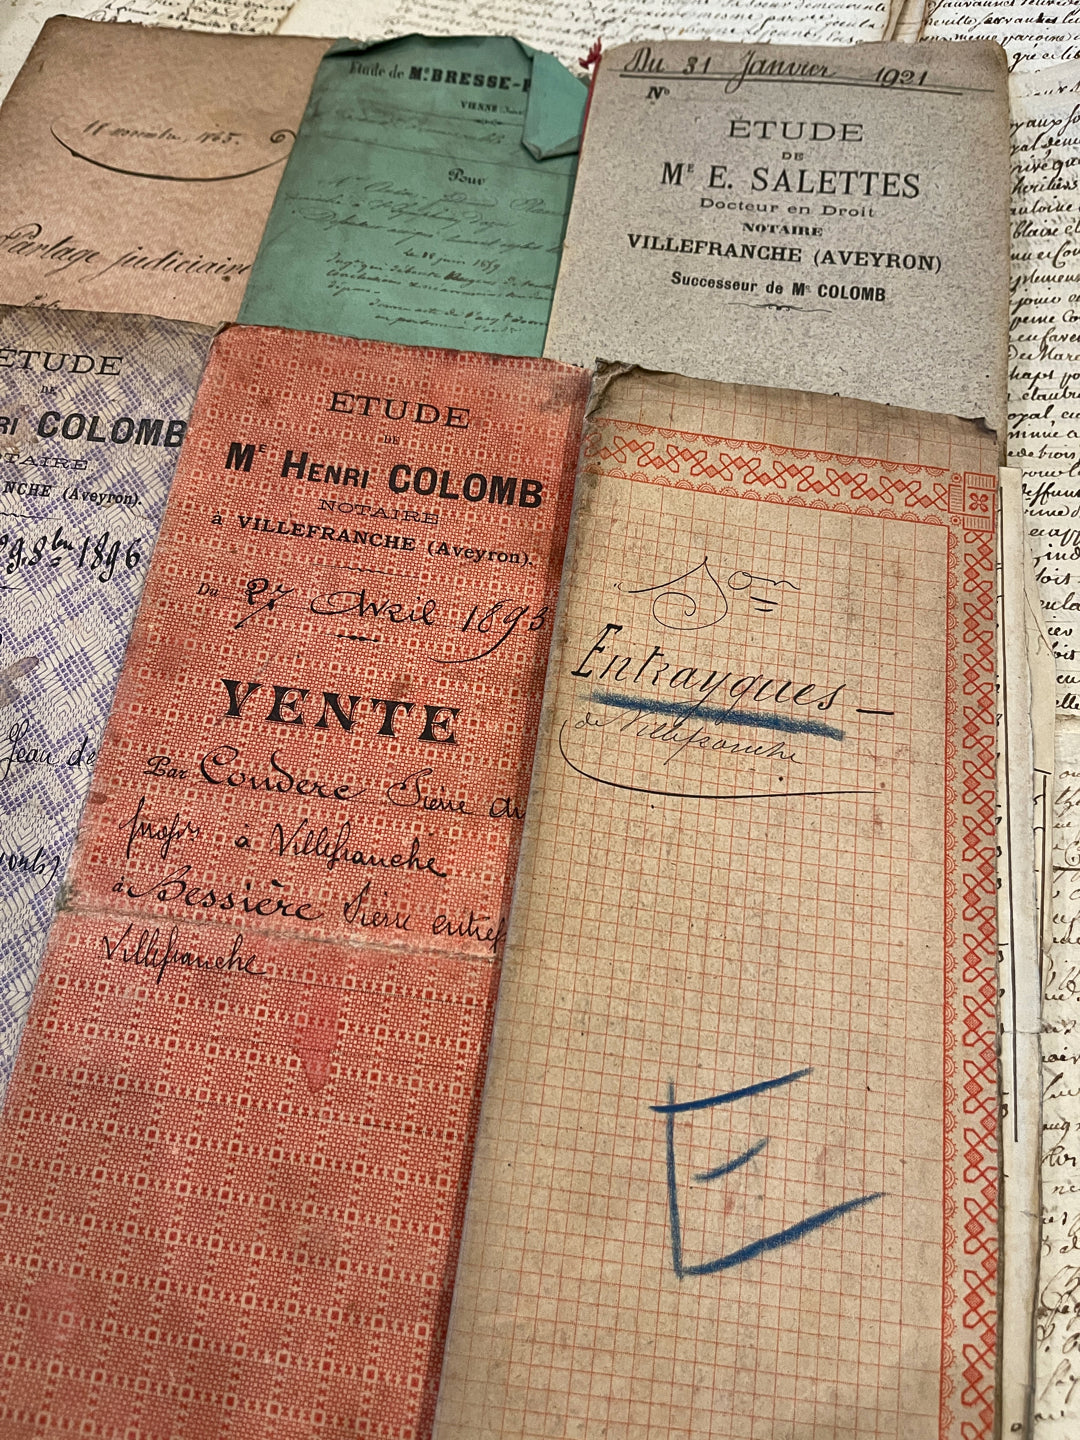 Original BEAUTIFUL French Document folders